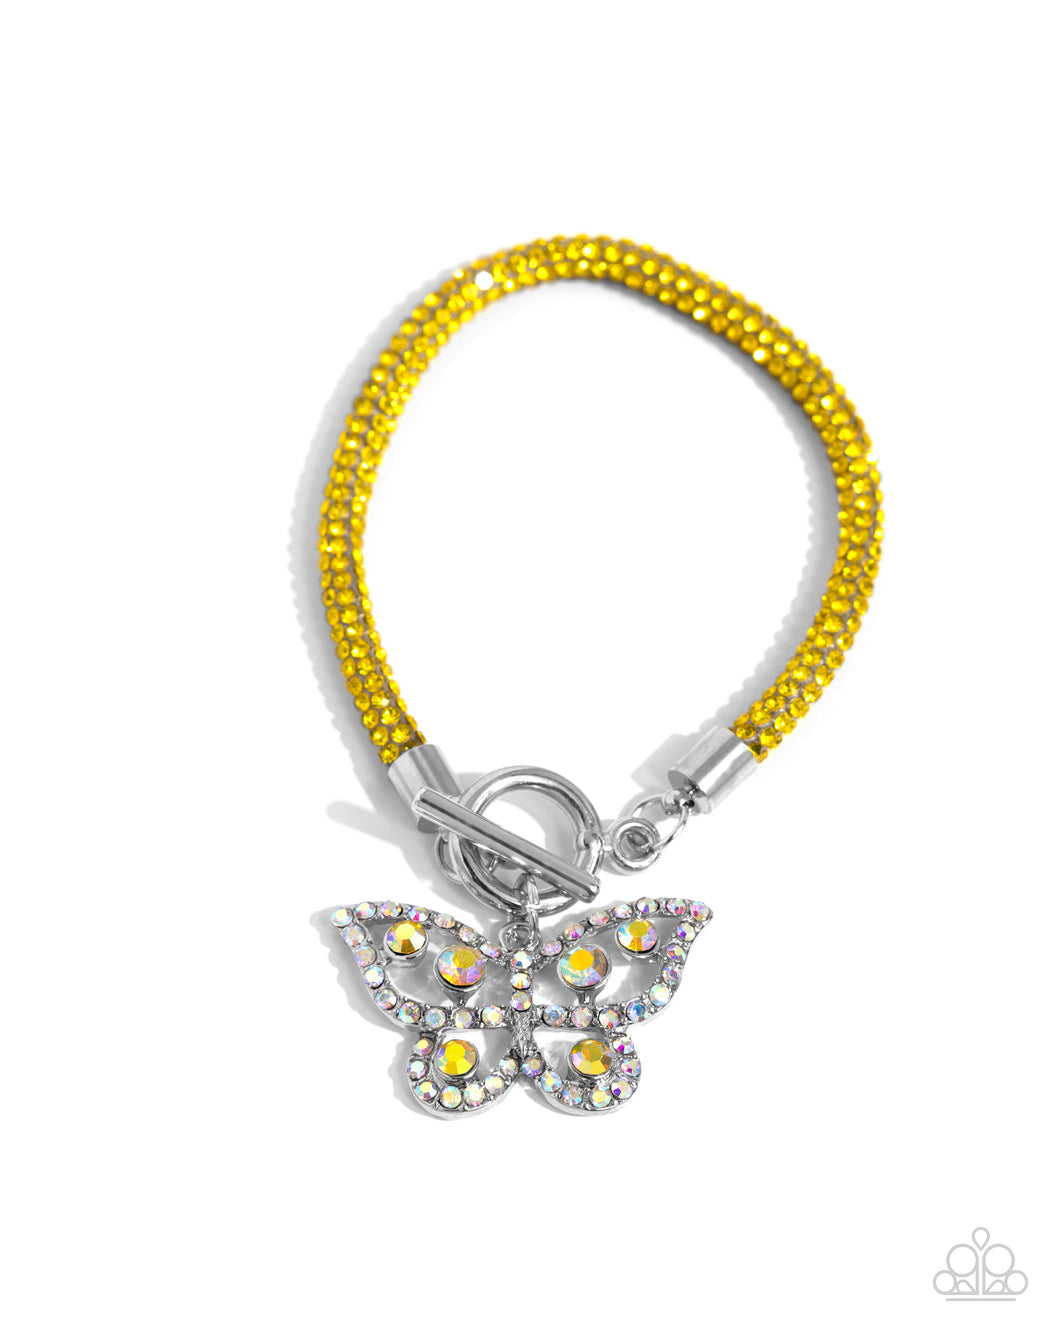 Aerial Appeal - Yellow Bracelet